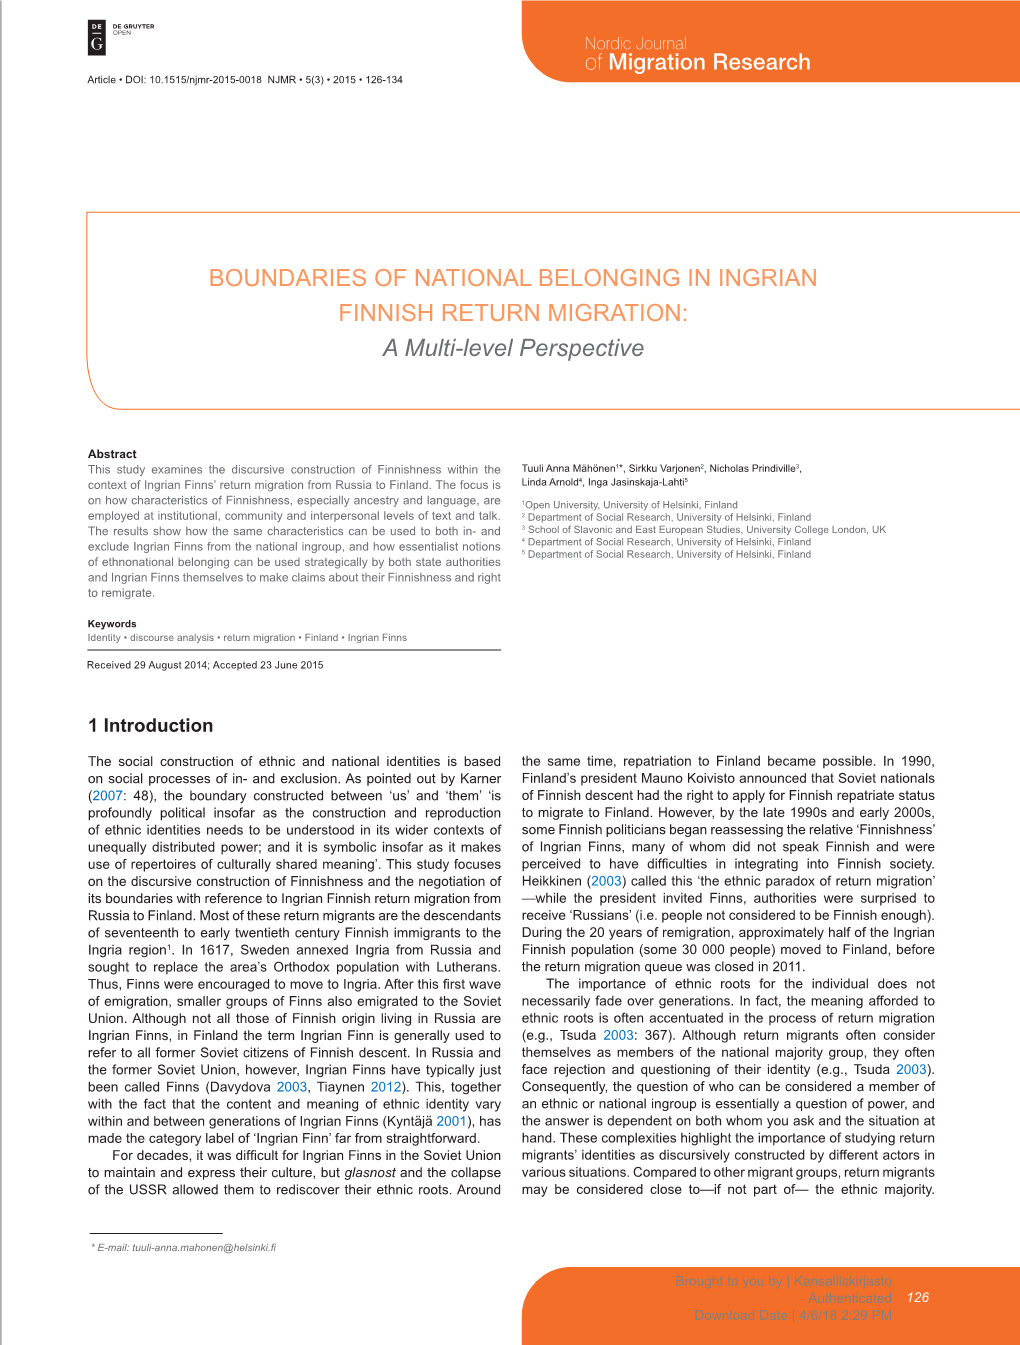 BOUNDARIES of NATIONAL BELONGING in INGRIAN FINNISH RETURN MIGRATION: a Multi-Level Perspective